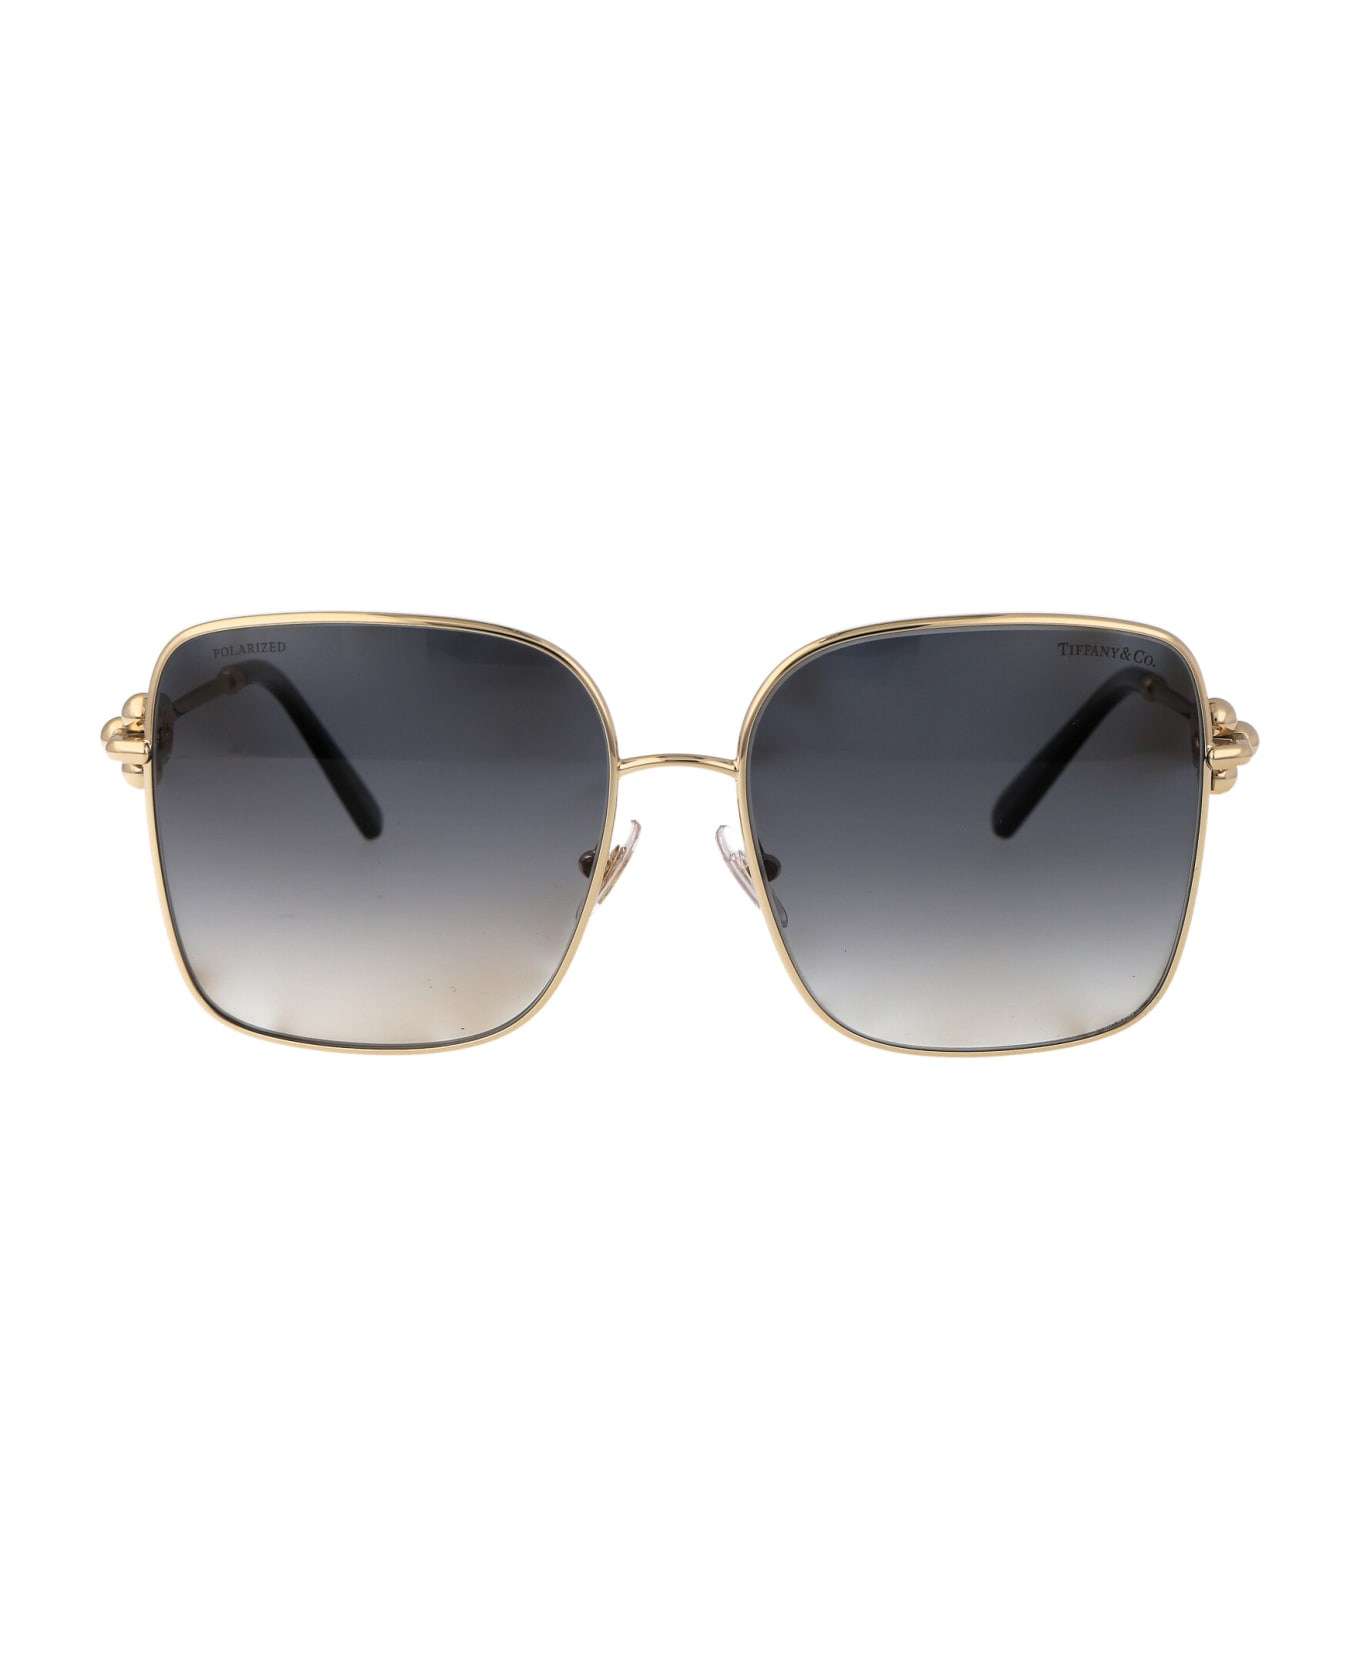 Tiffany & Co. 0tf3094 Sunglasses - 6198T3 Pale Gold